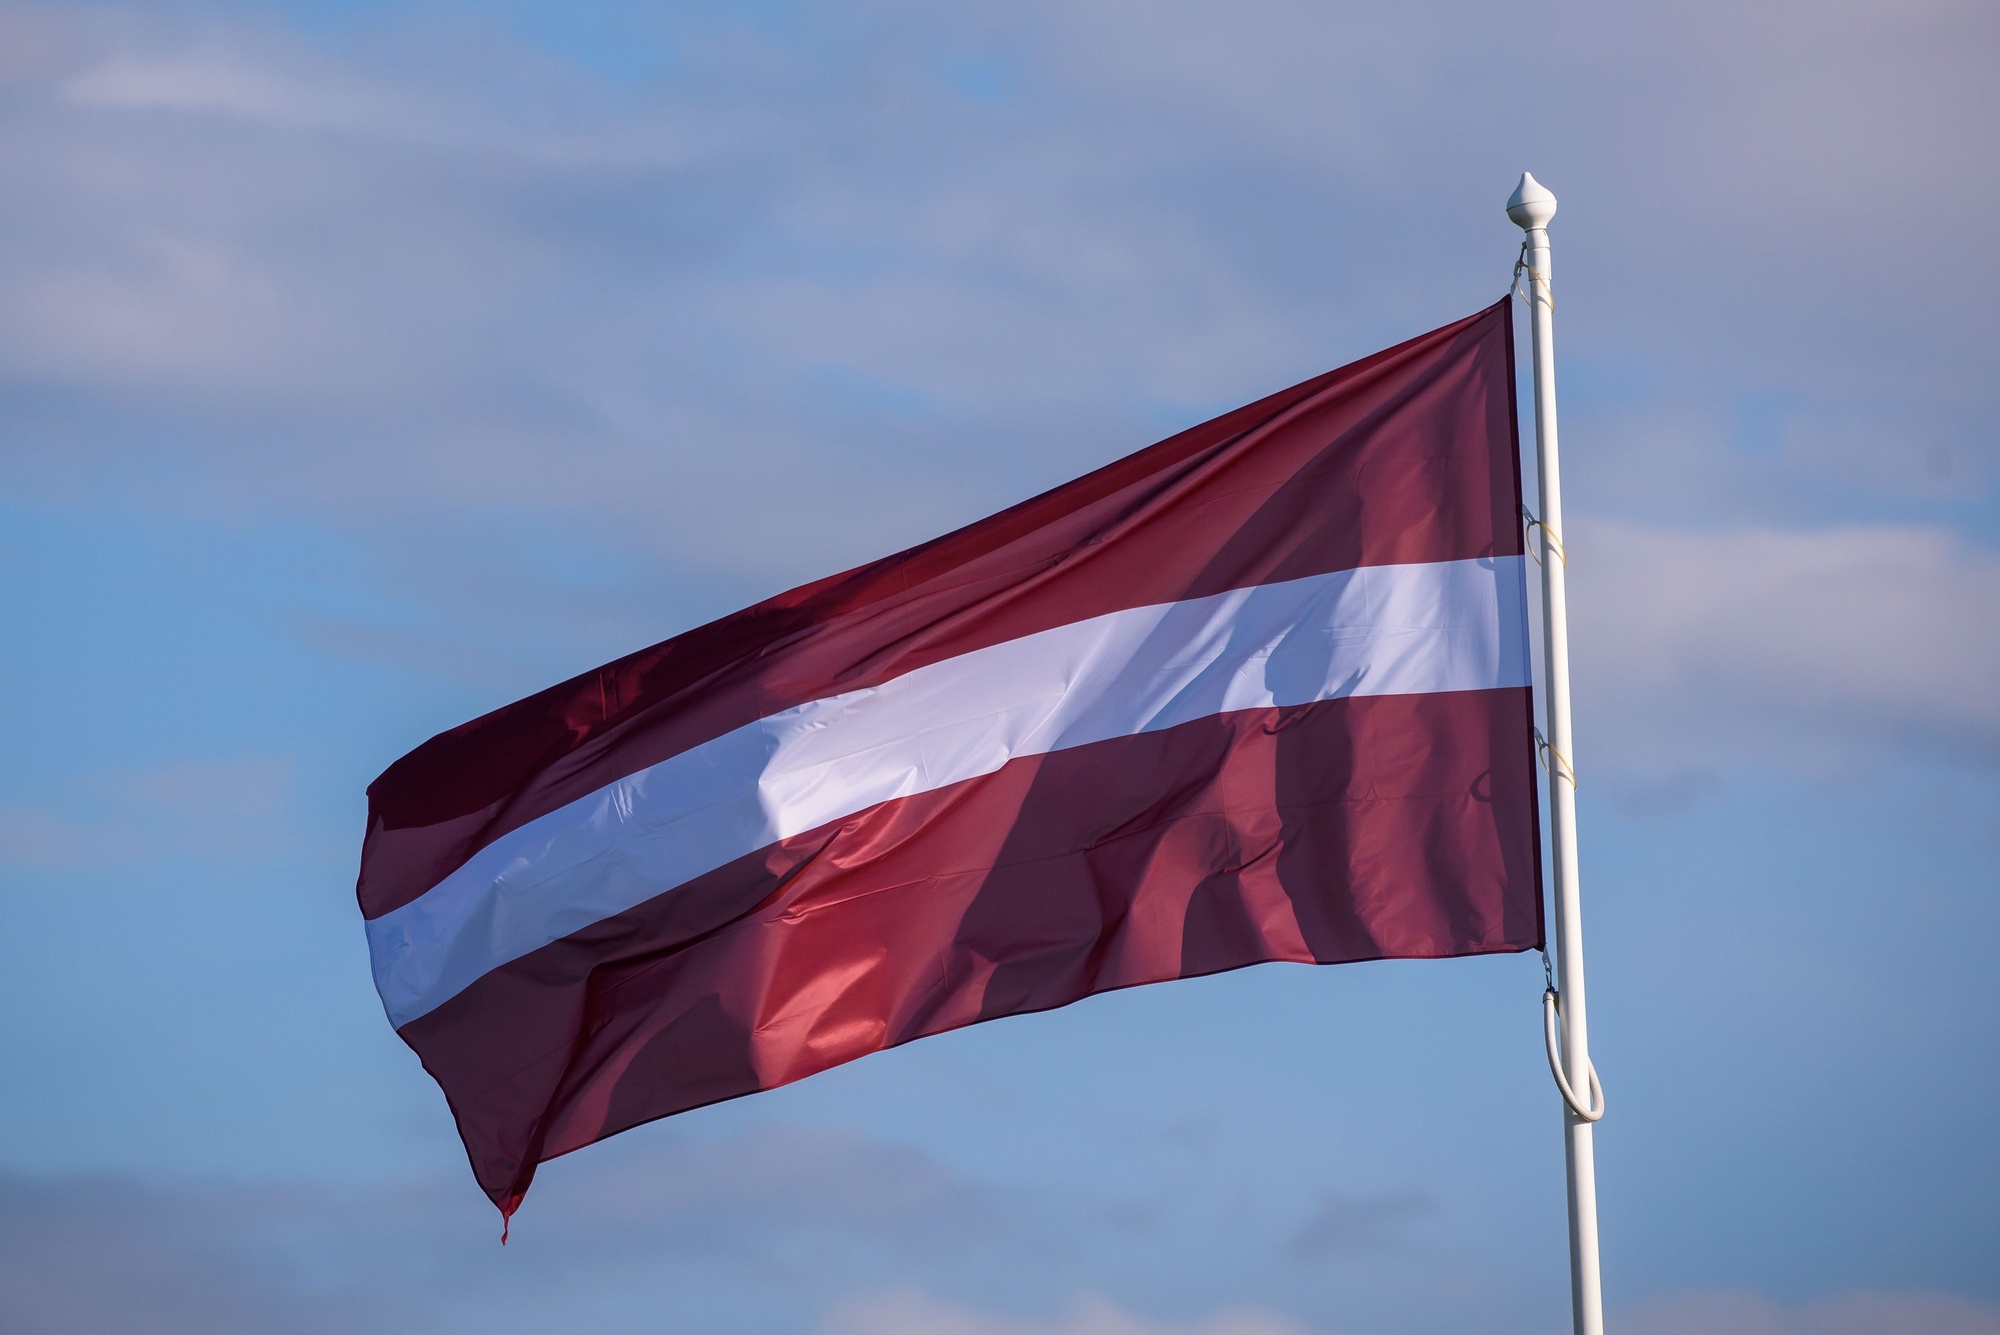 Latvian flag, illustrative image. Photo via Eastnews.ua.